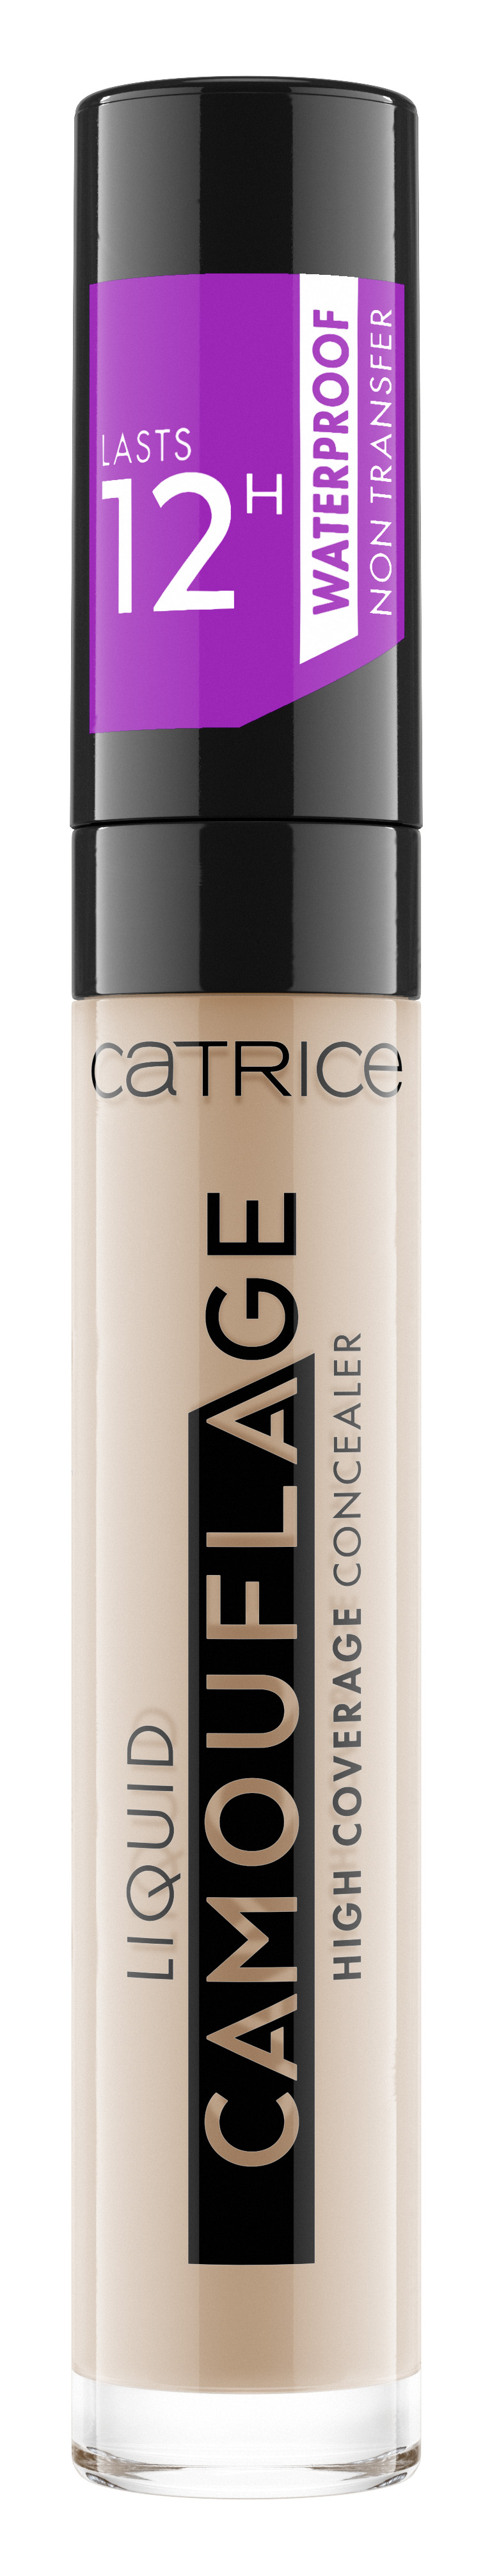 Консилер для лица CATRICE Liquid Camouflage - High Coverage Concealer 020 Light Beige когда мы надеемся